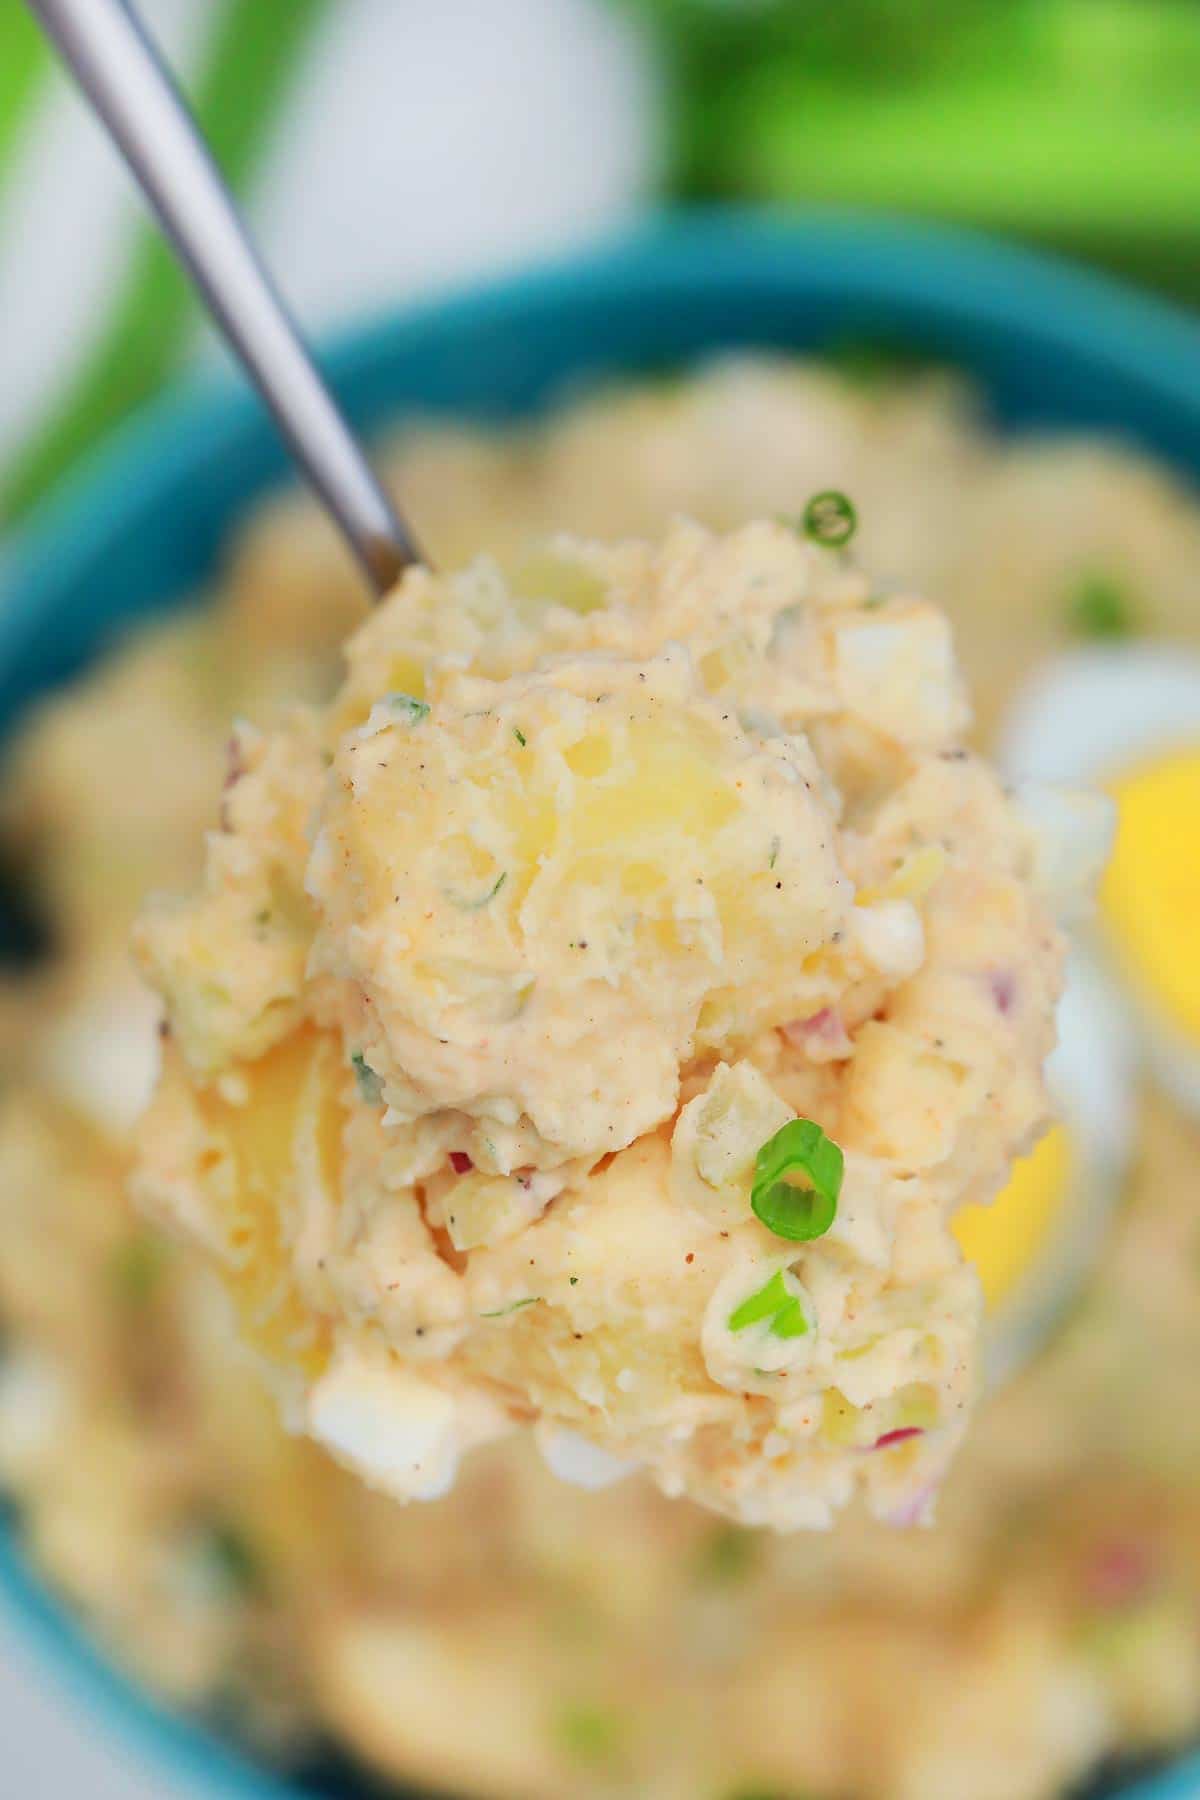 Spoon of potato salad